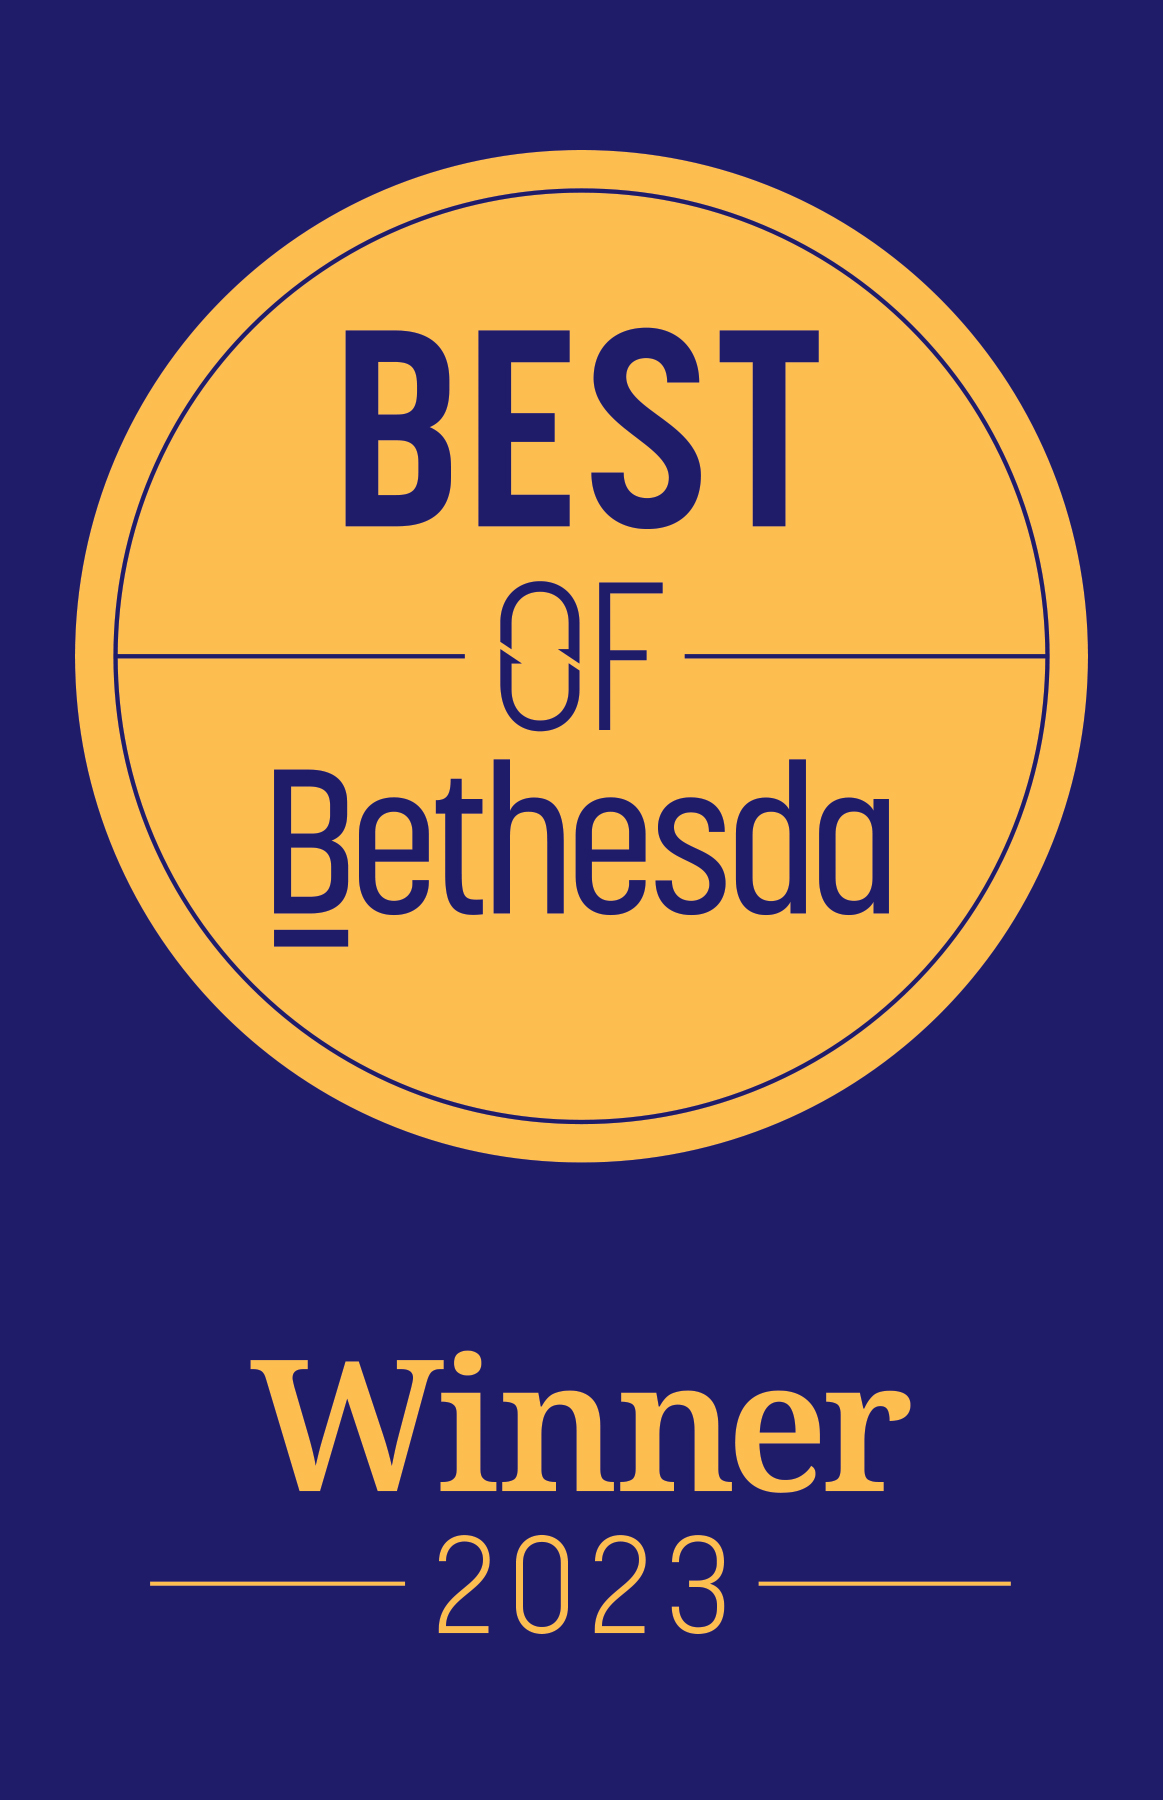 Best of Bethesda Award